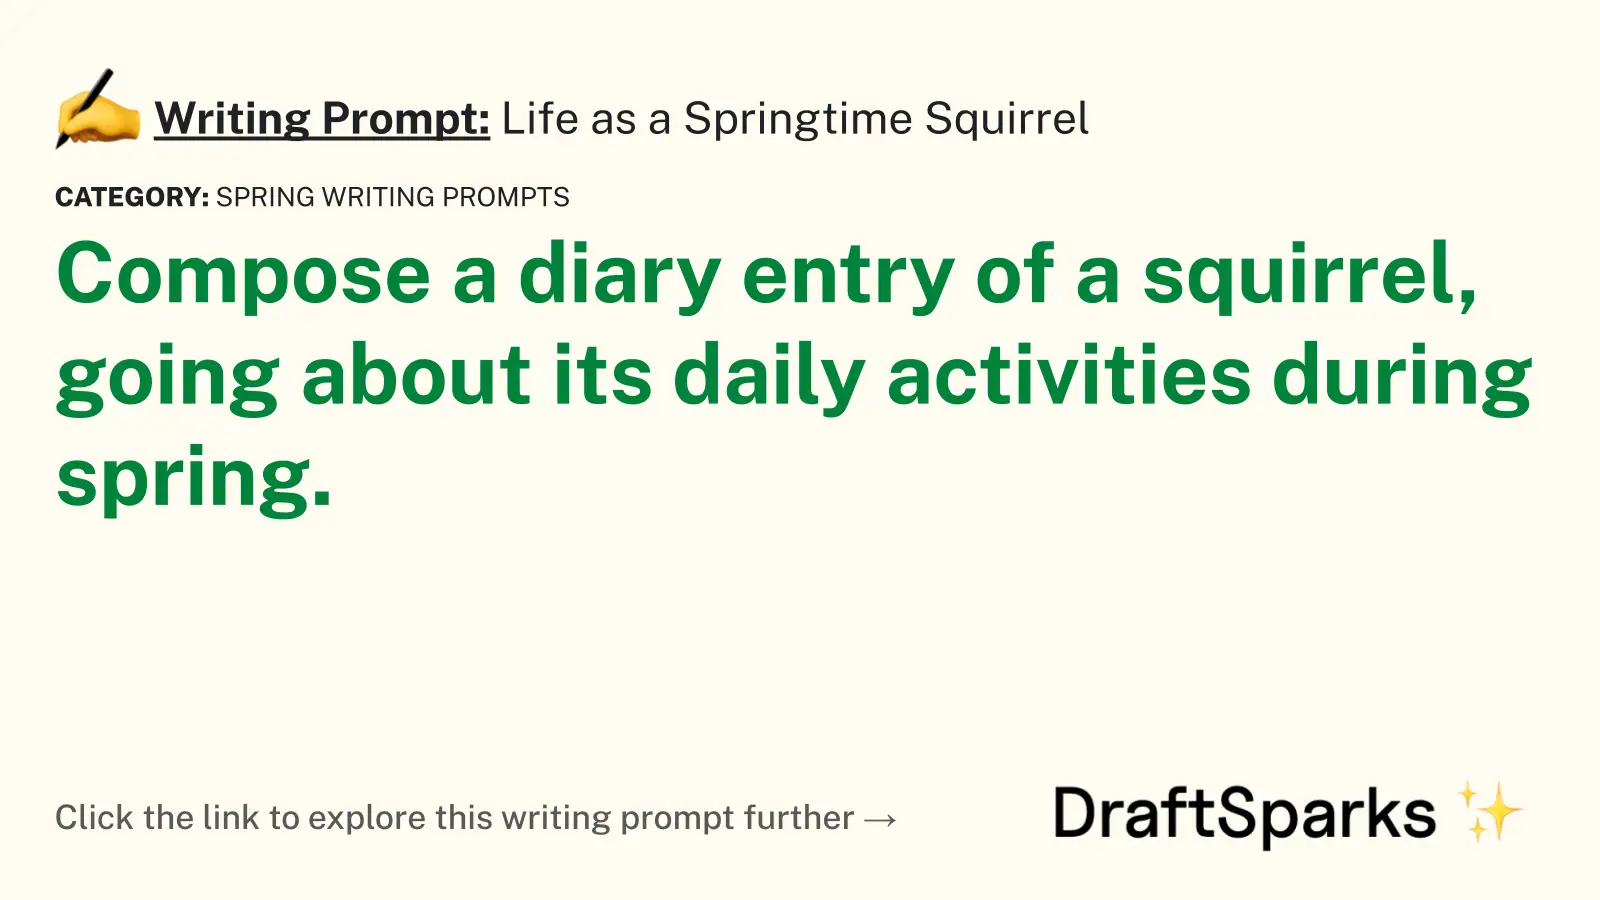 Life as a Springtime Squirrel